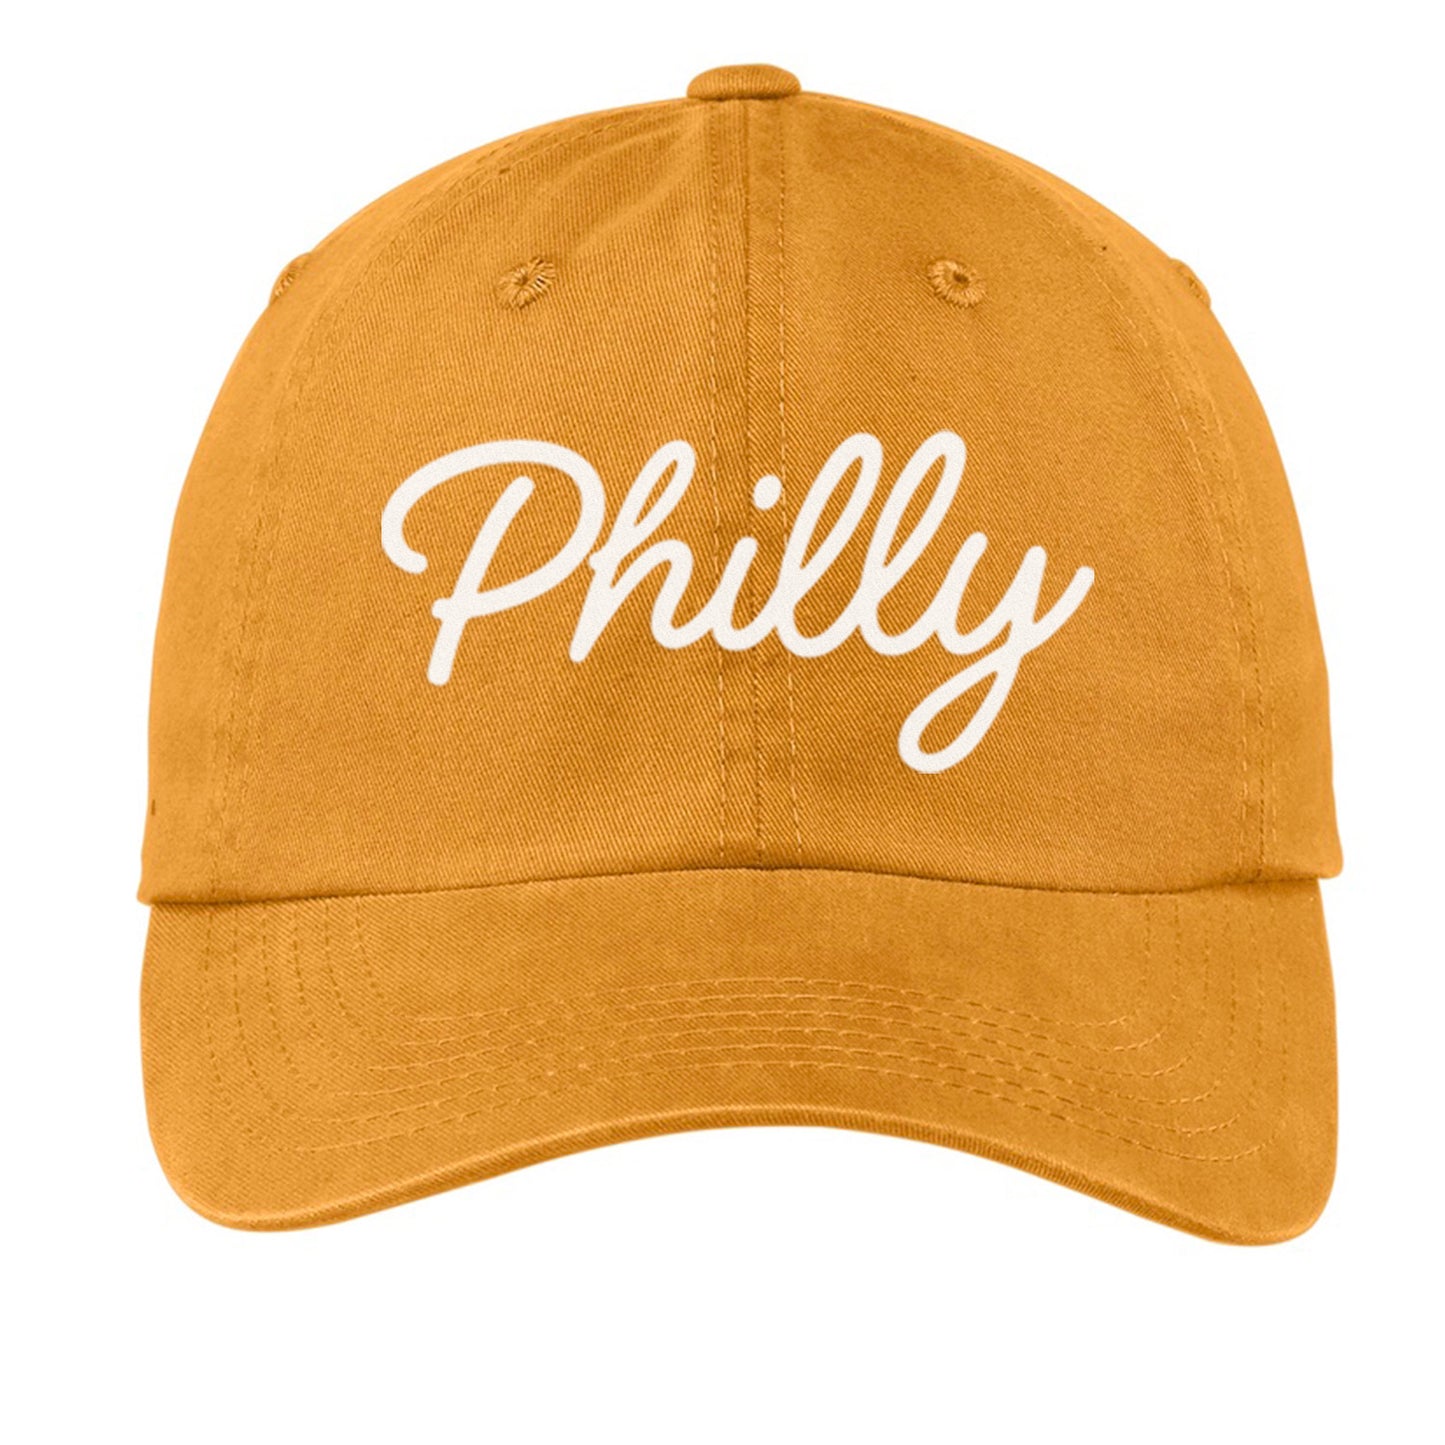 Philly Cursive Baseball Cap